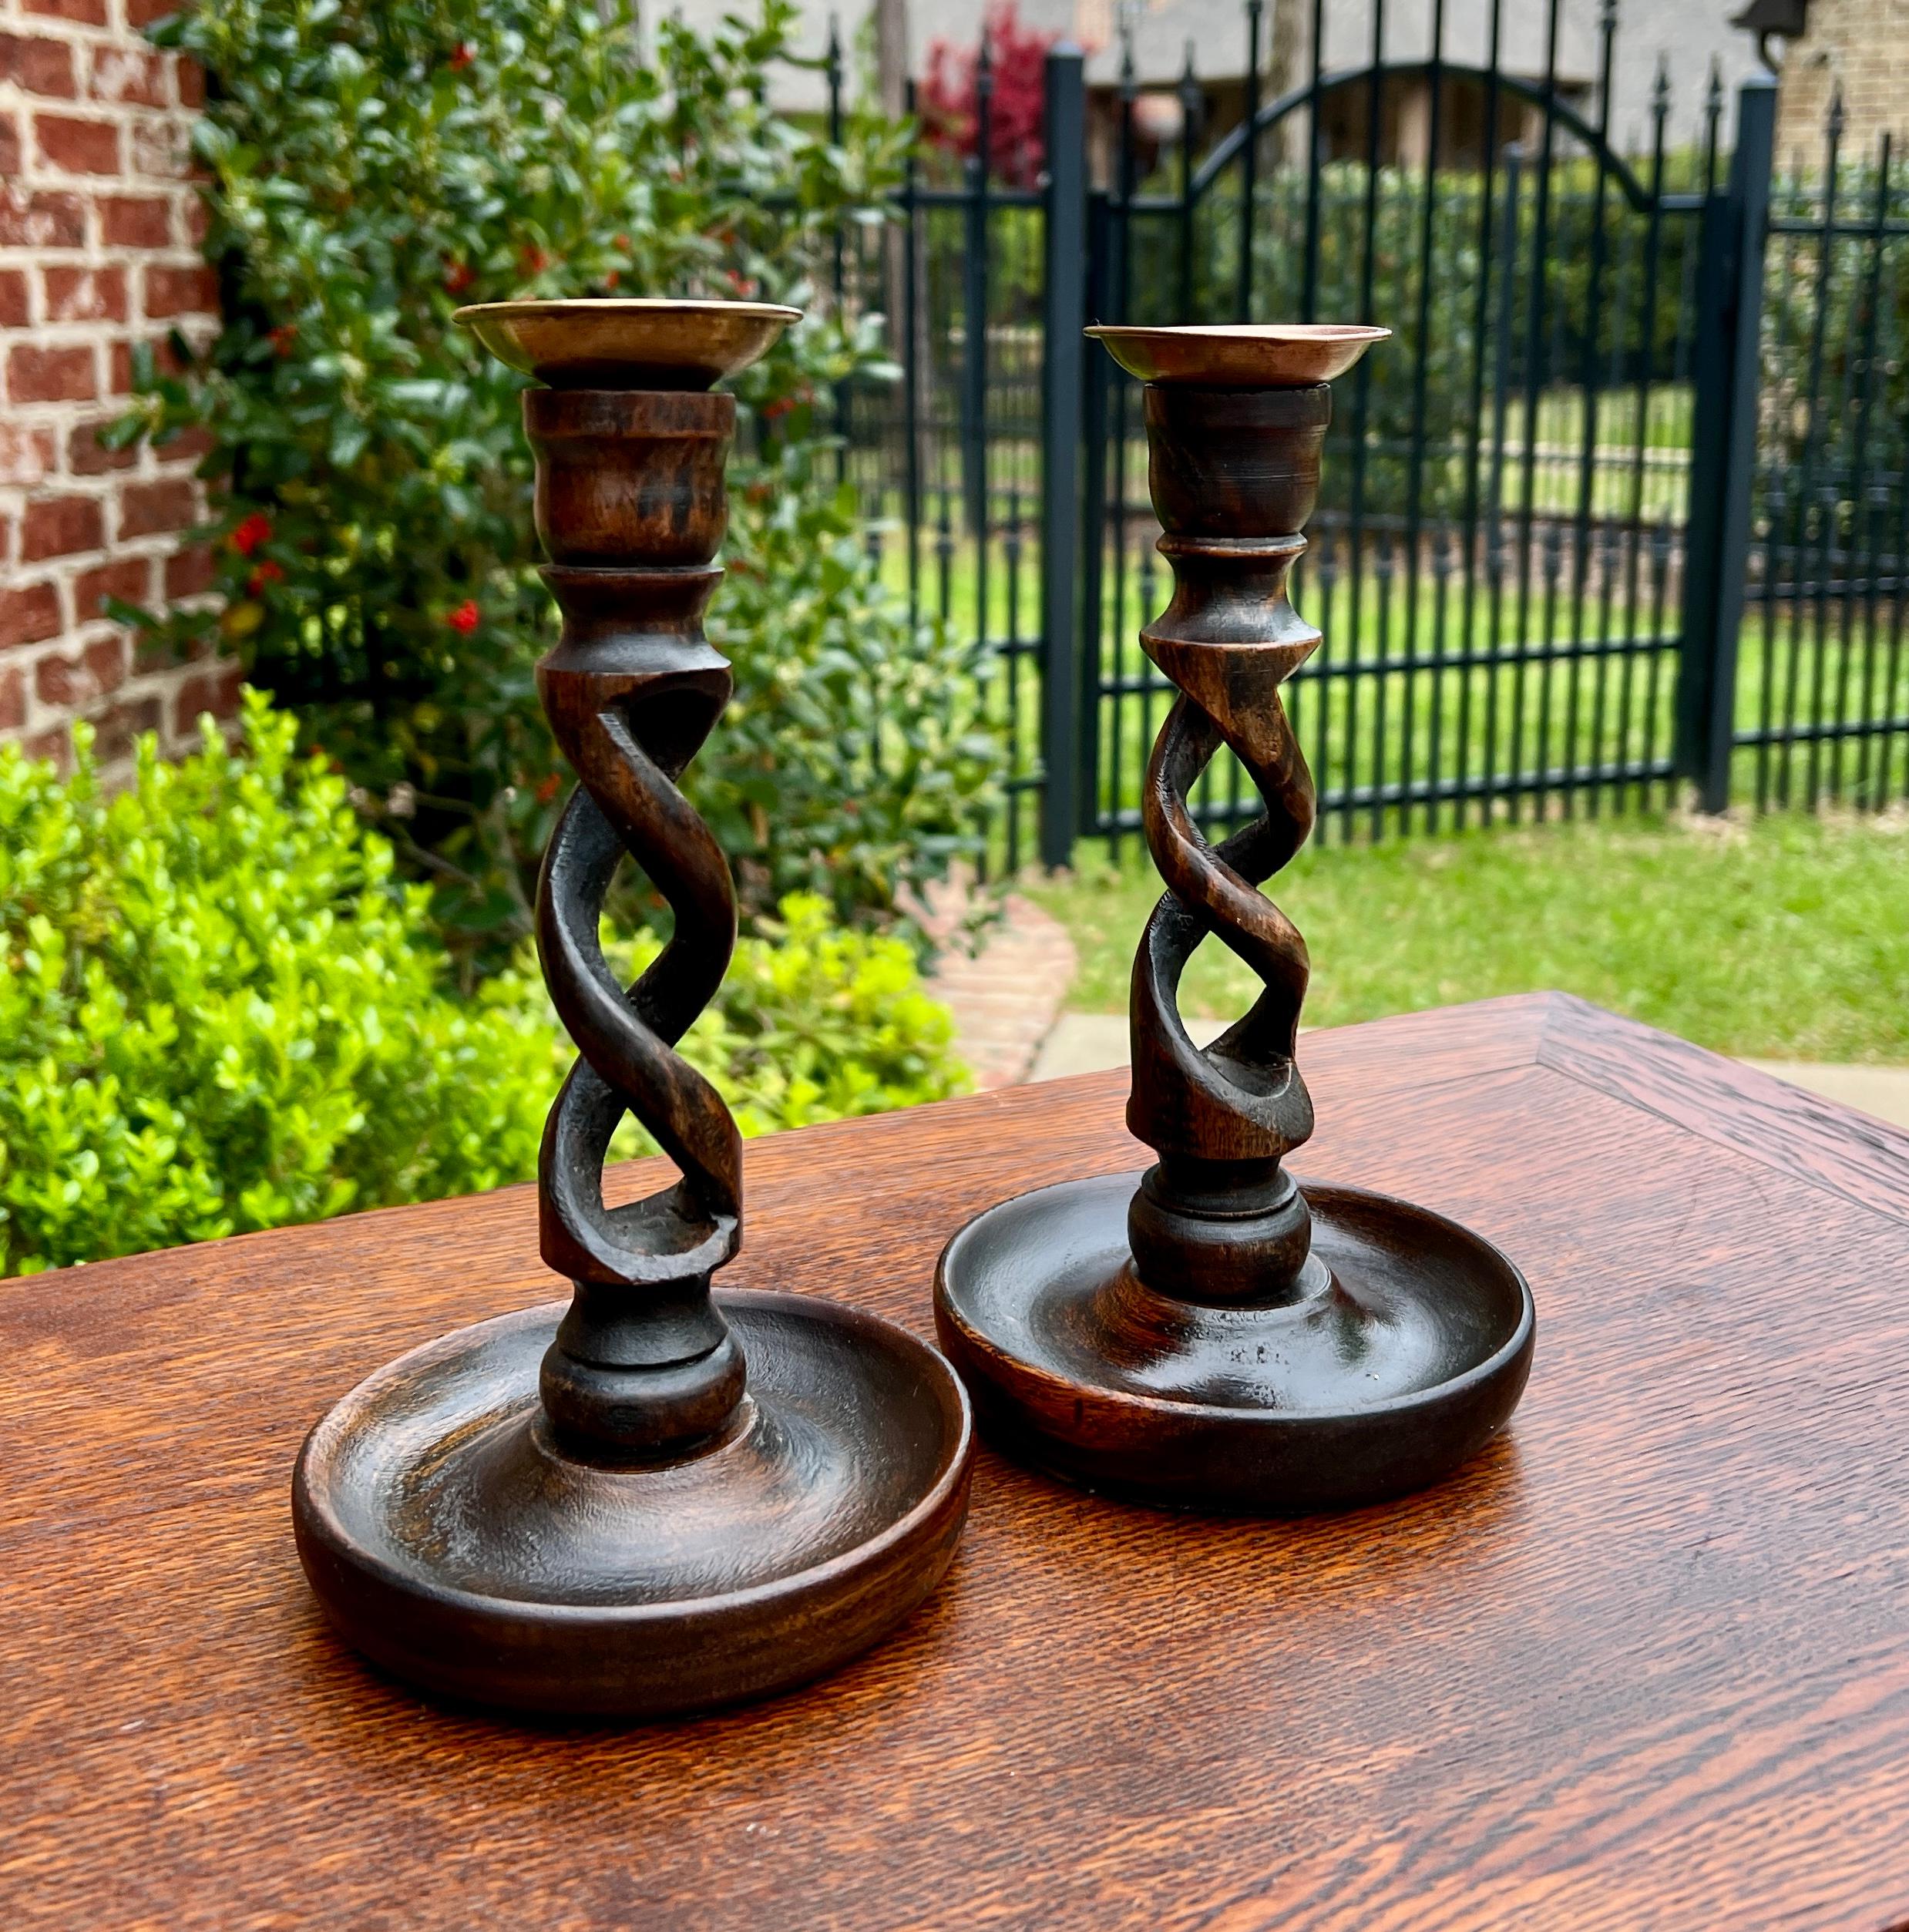  CHARMING Pair of Antique English Oak Short OPEN BARLEY TWIST Candlesticks Candle Holders c. 1920s

Beautiful twist with dark oak patina

9